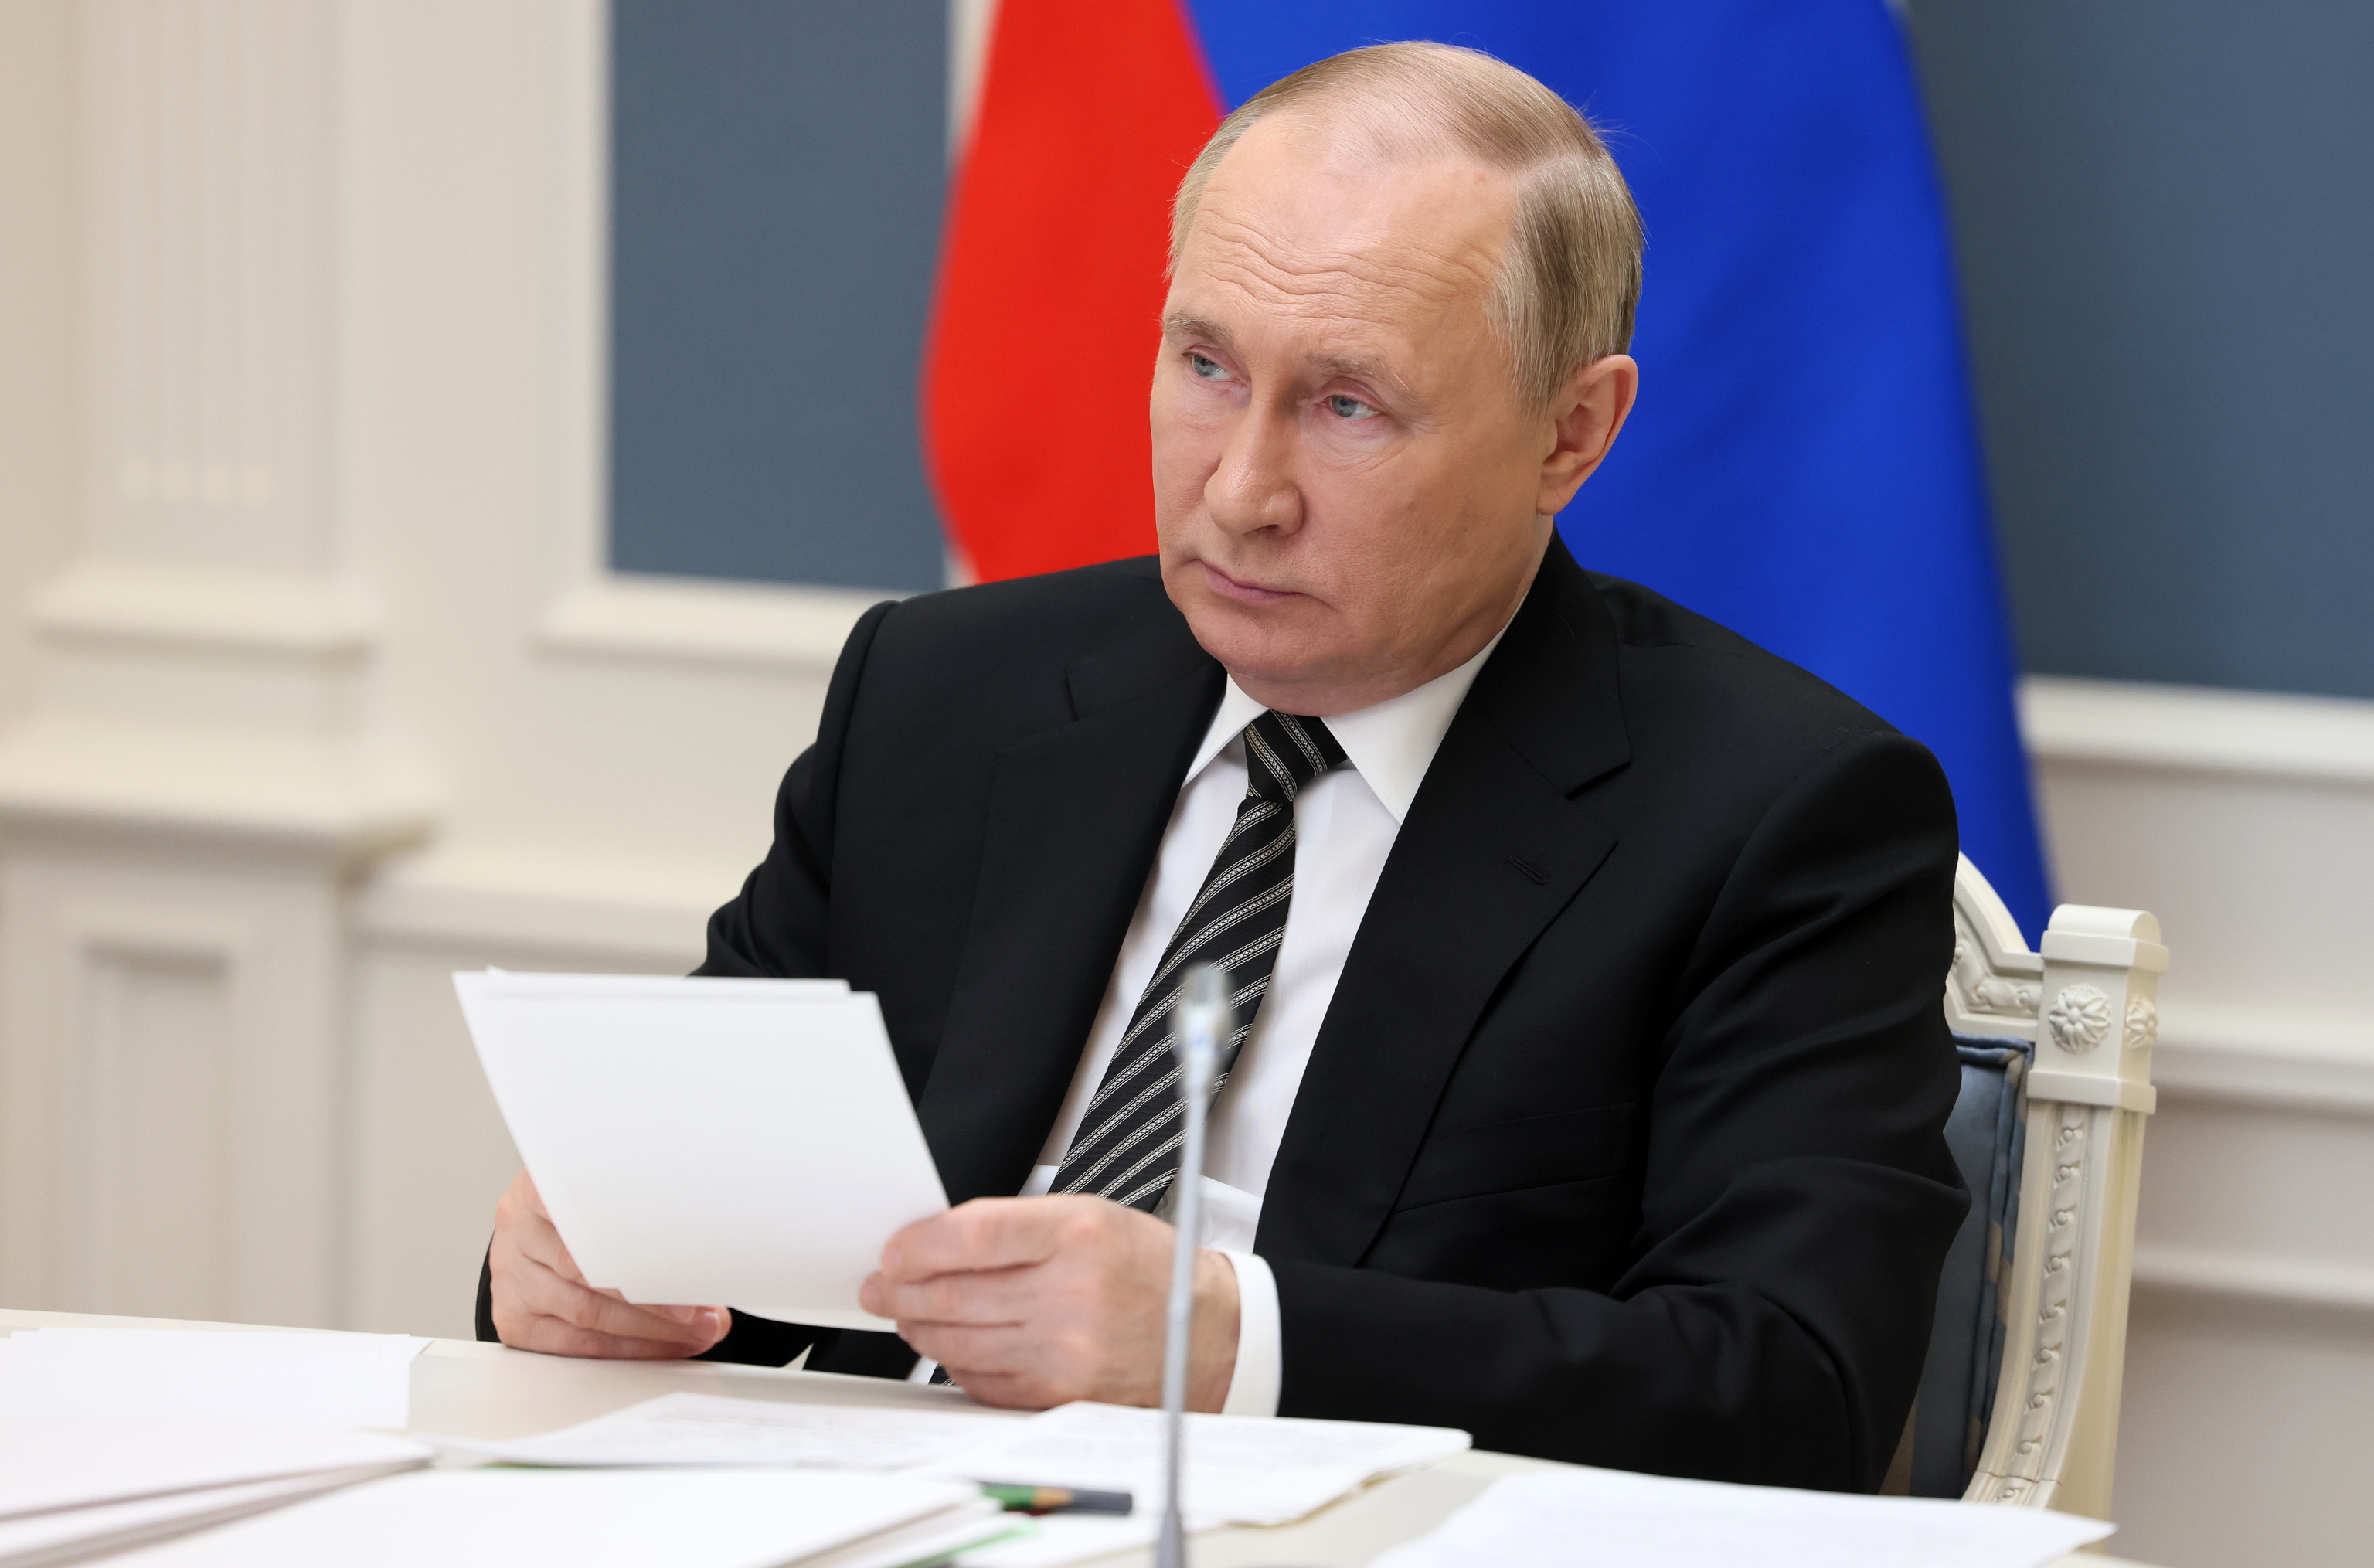 Vladimir Putin at a conference in the Kremlin.